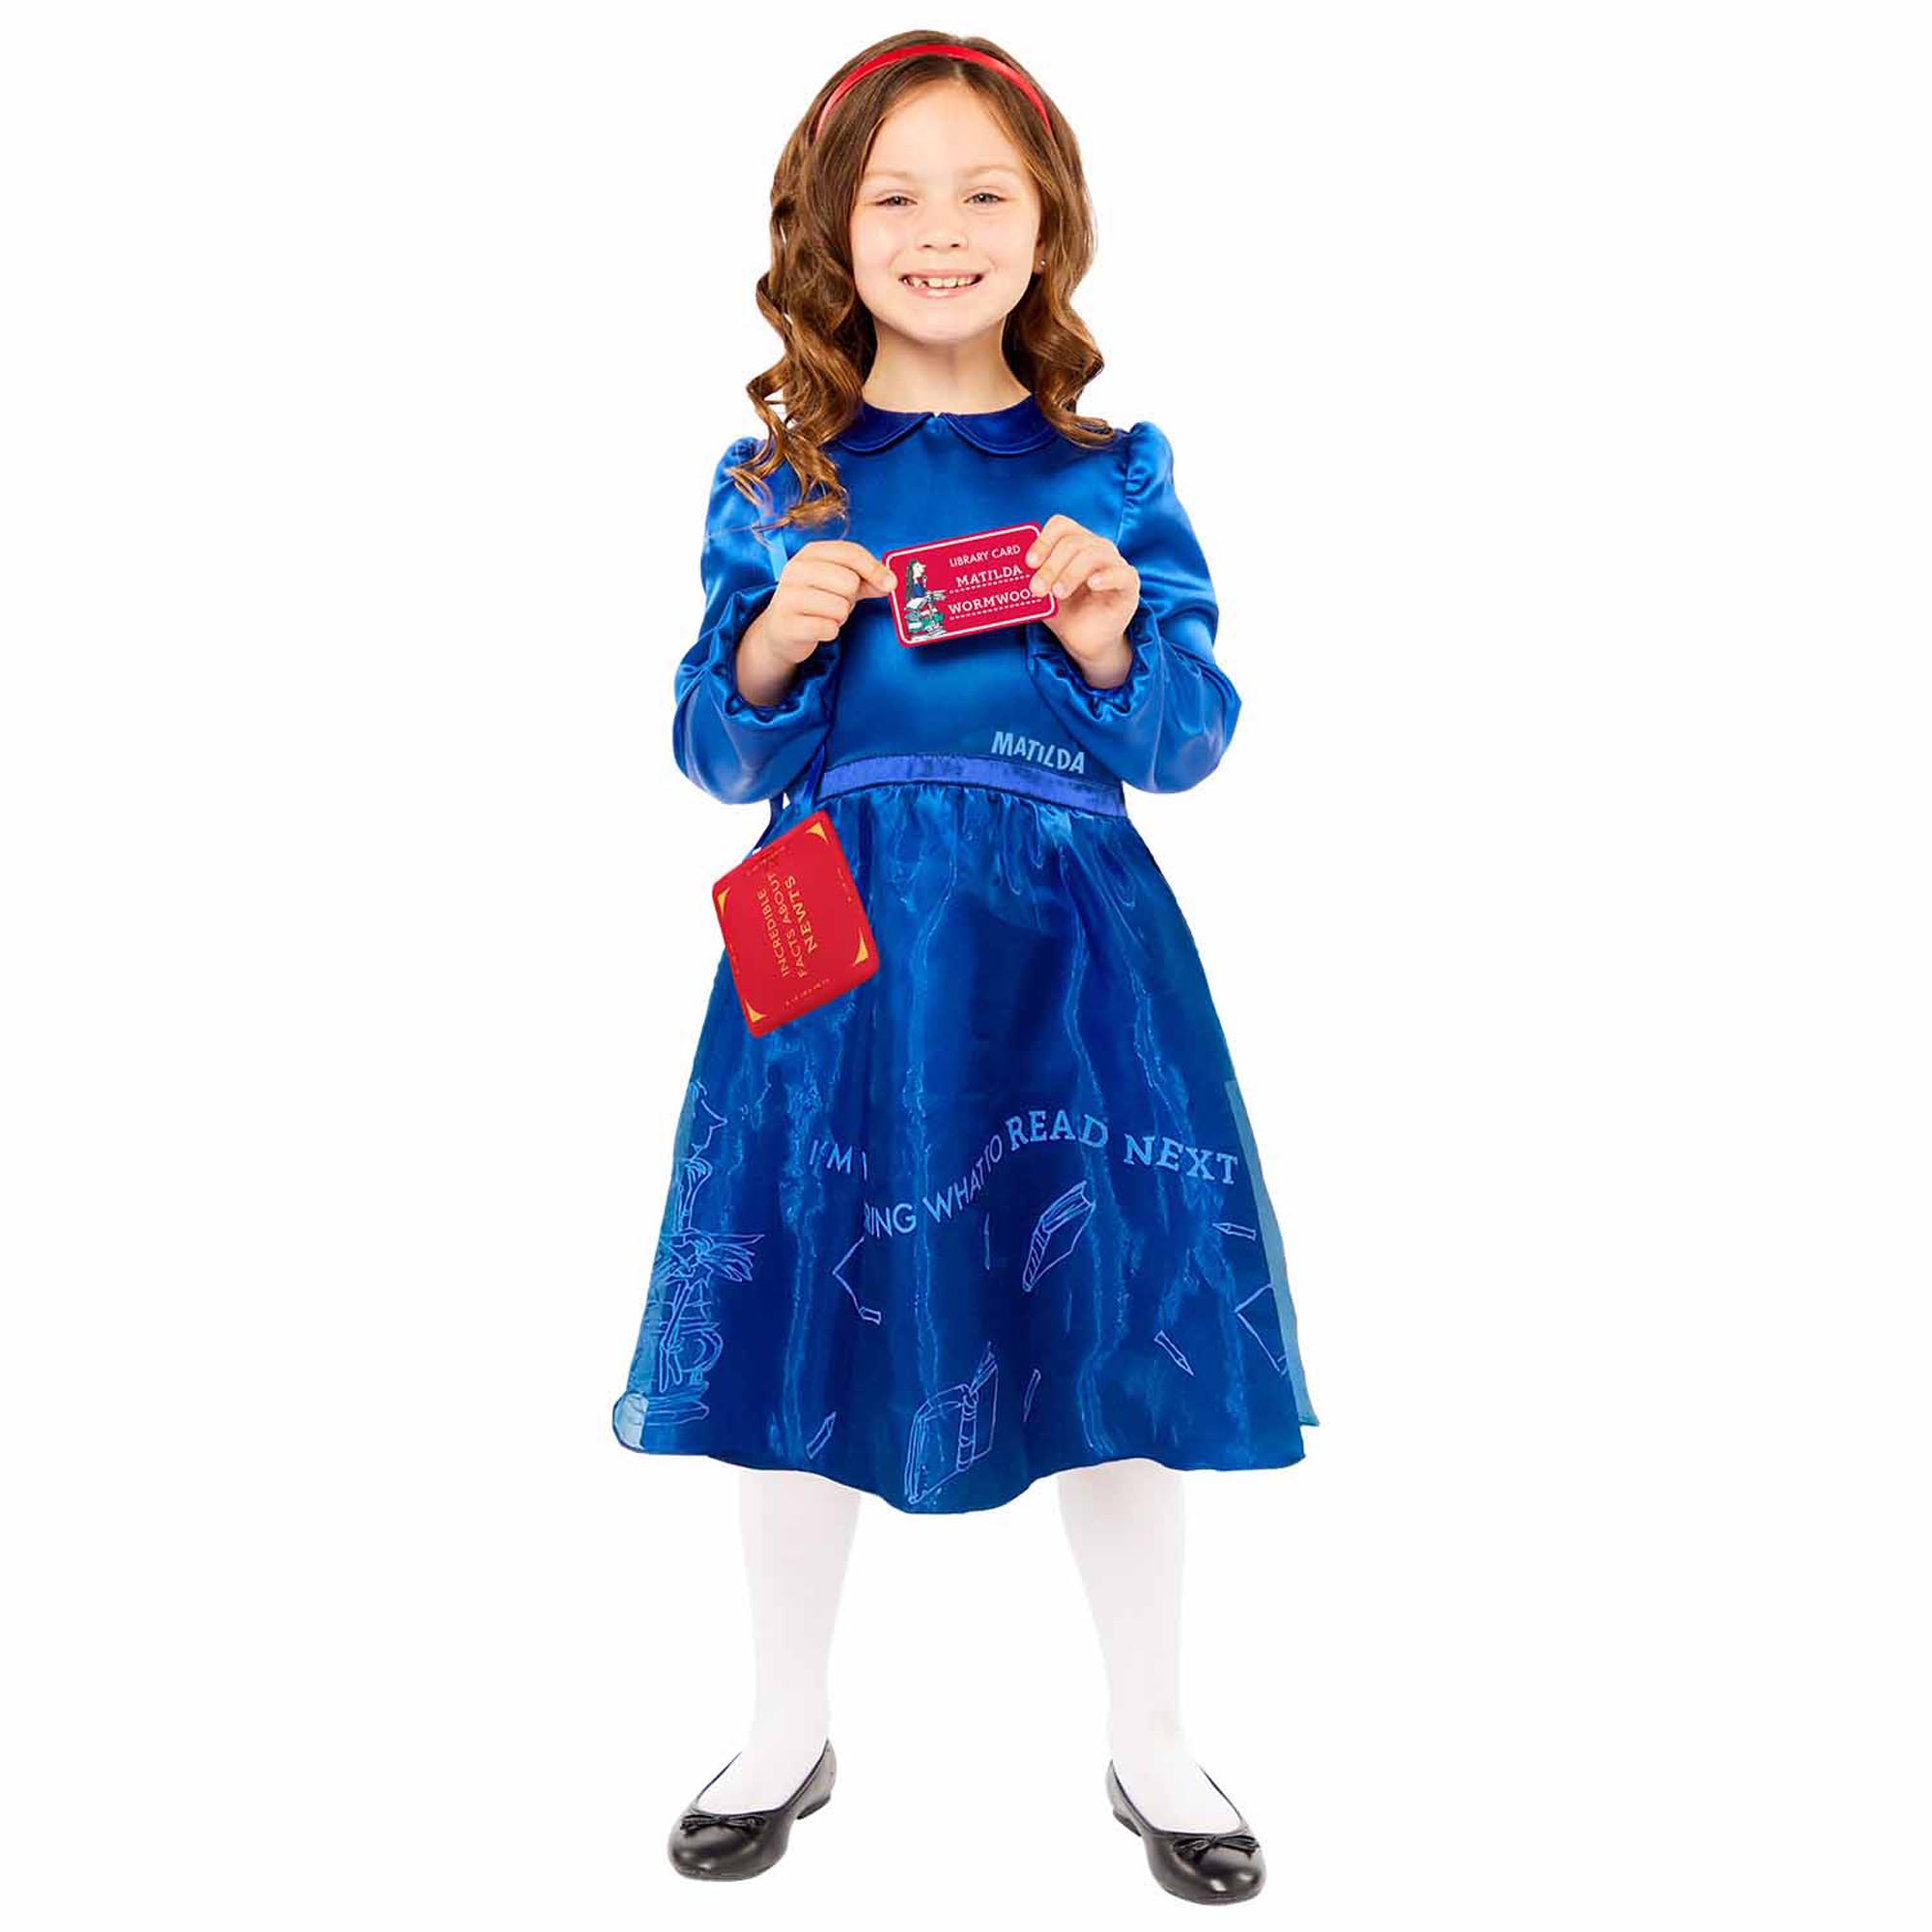 Matilda Children's Fancy Dress Costume